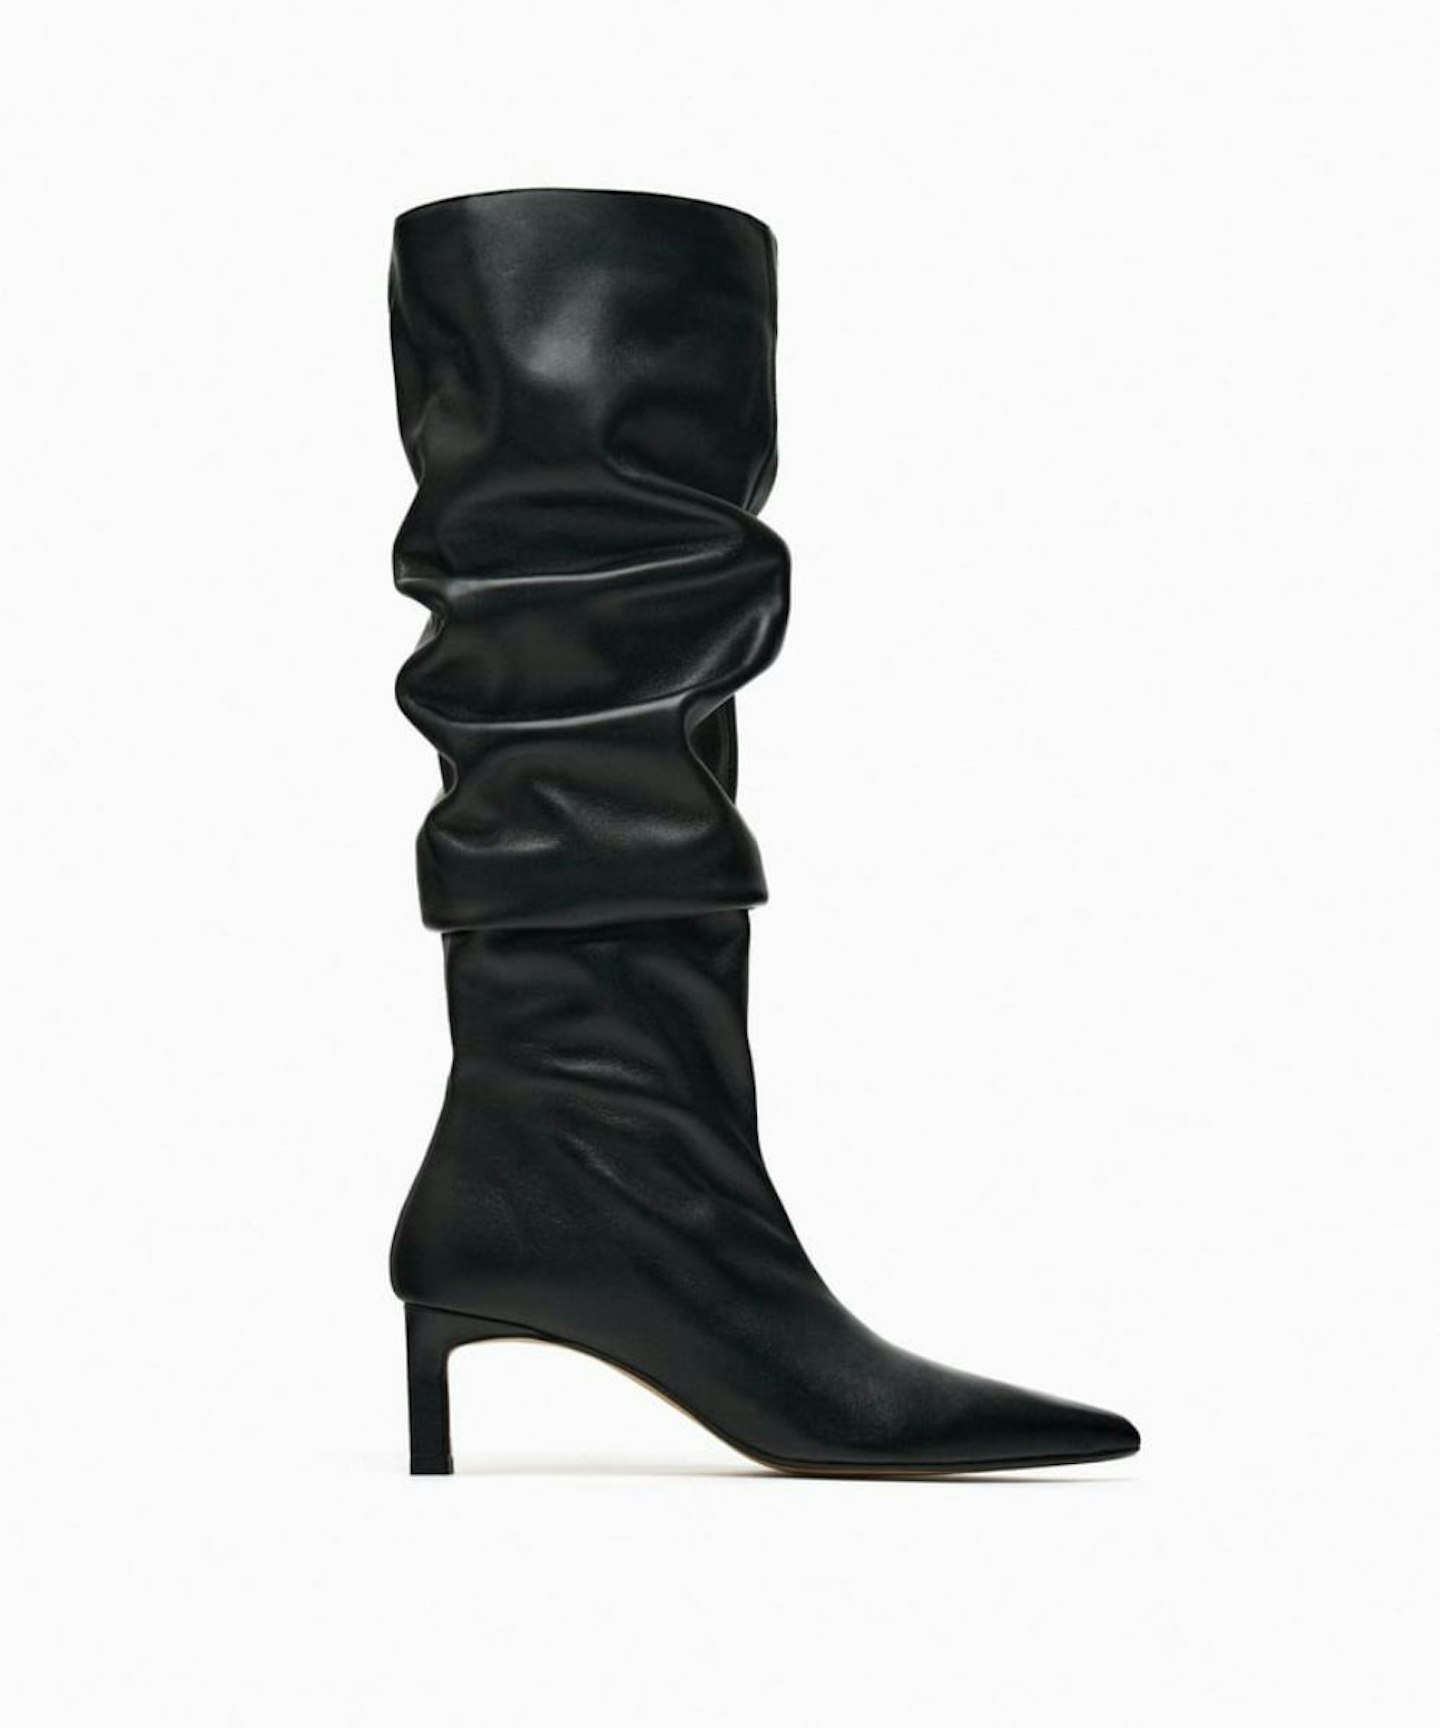 Gathered Leather High-Heel Boots, Zara